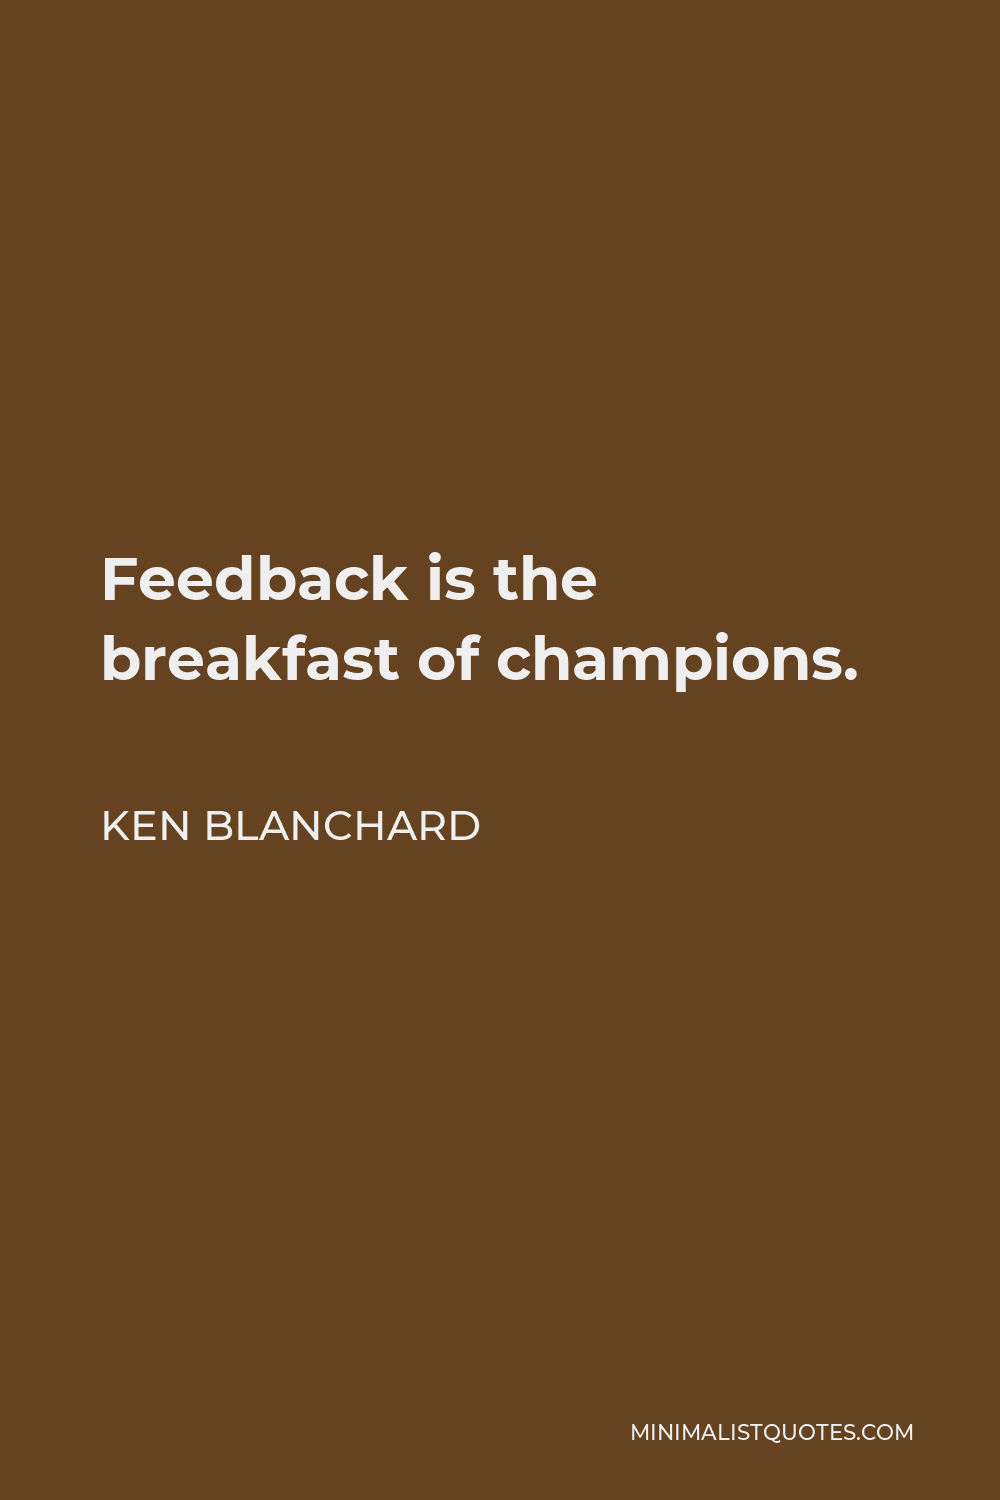 Ken Blanchard Quote - Feedback is the breakfast of champions.